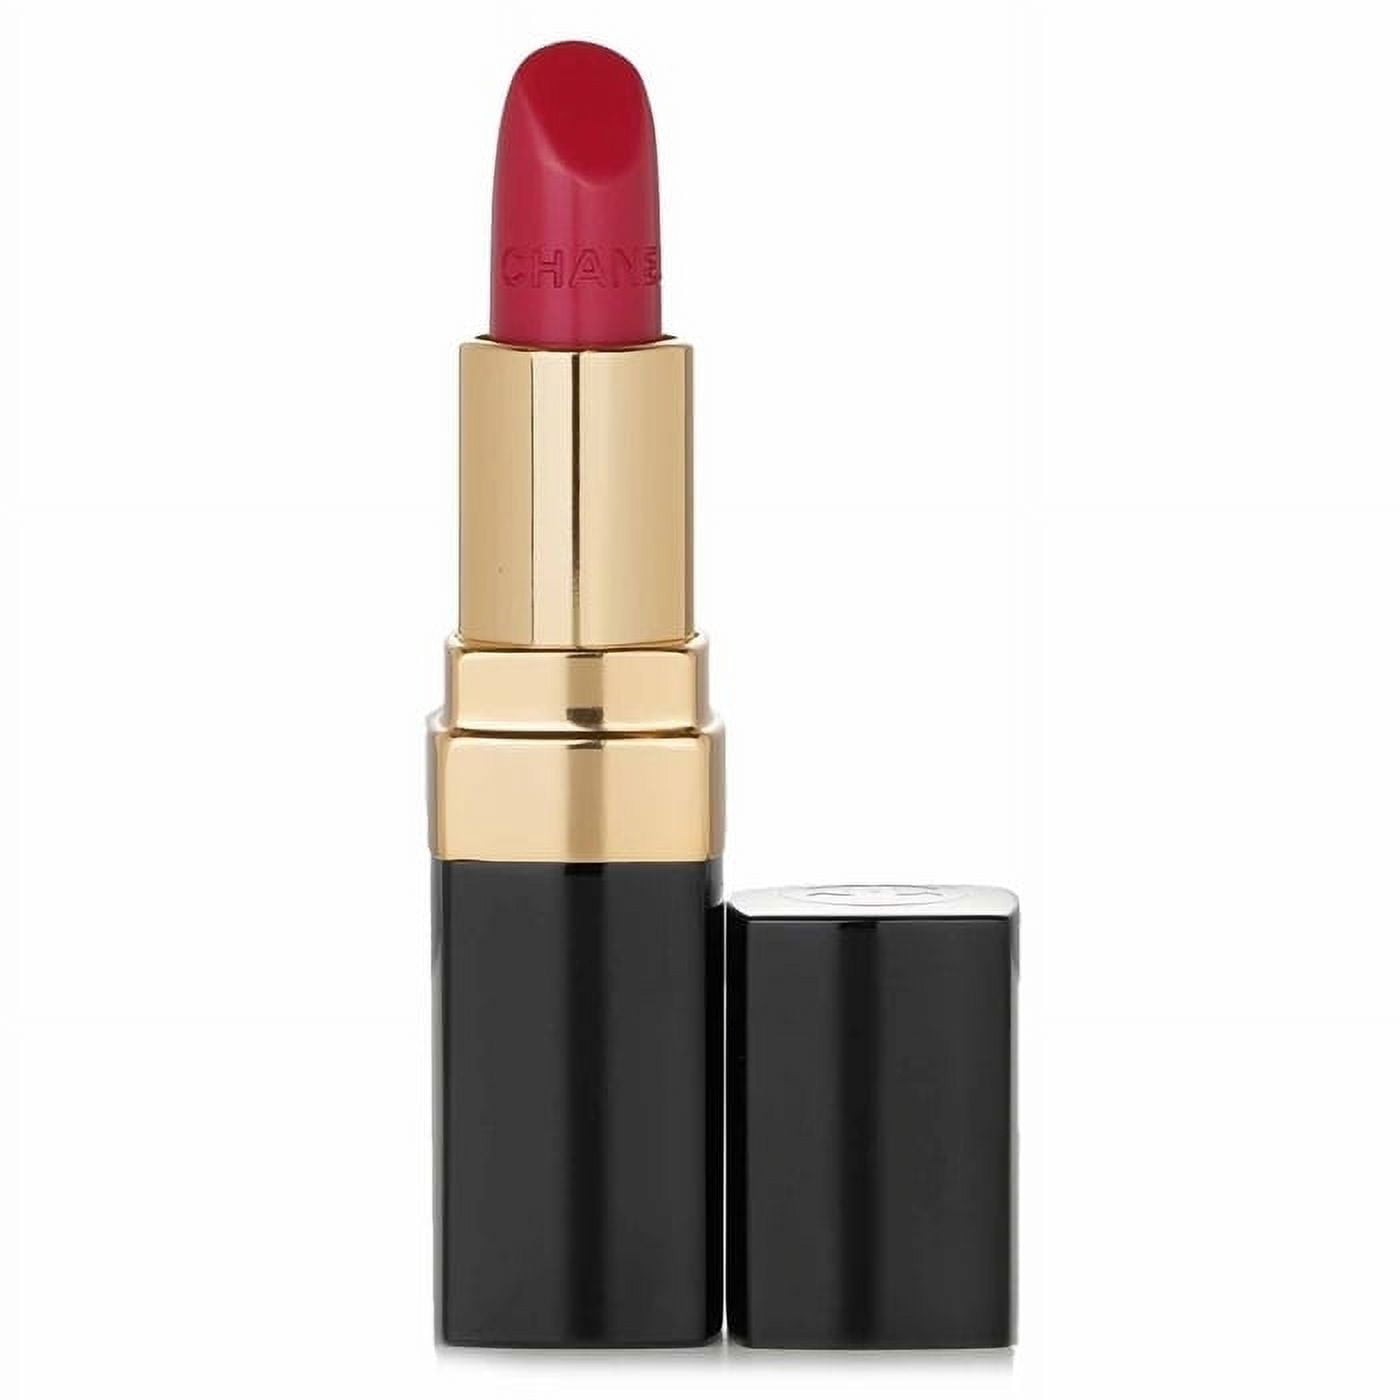 Chanel Rouge Coco Ultra Hydrating Lip Colour - # 442 Dimitri 3.5g/0.12oz